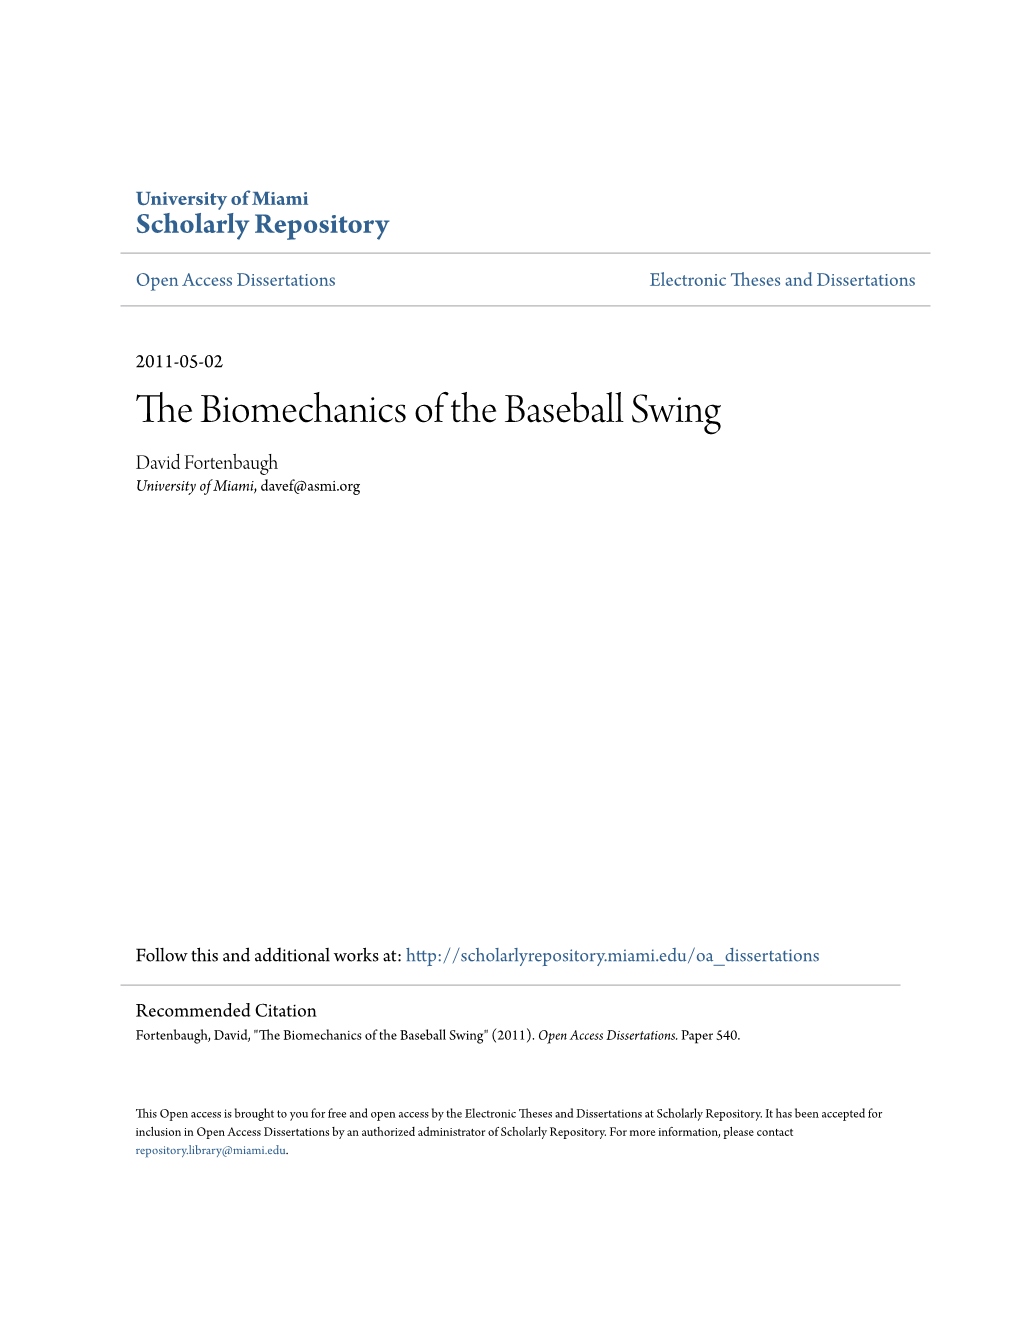 The Biomechanics of the Baseball Swing